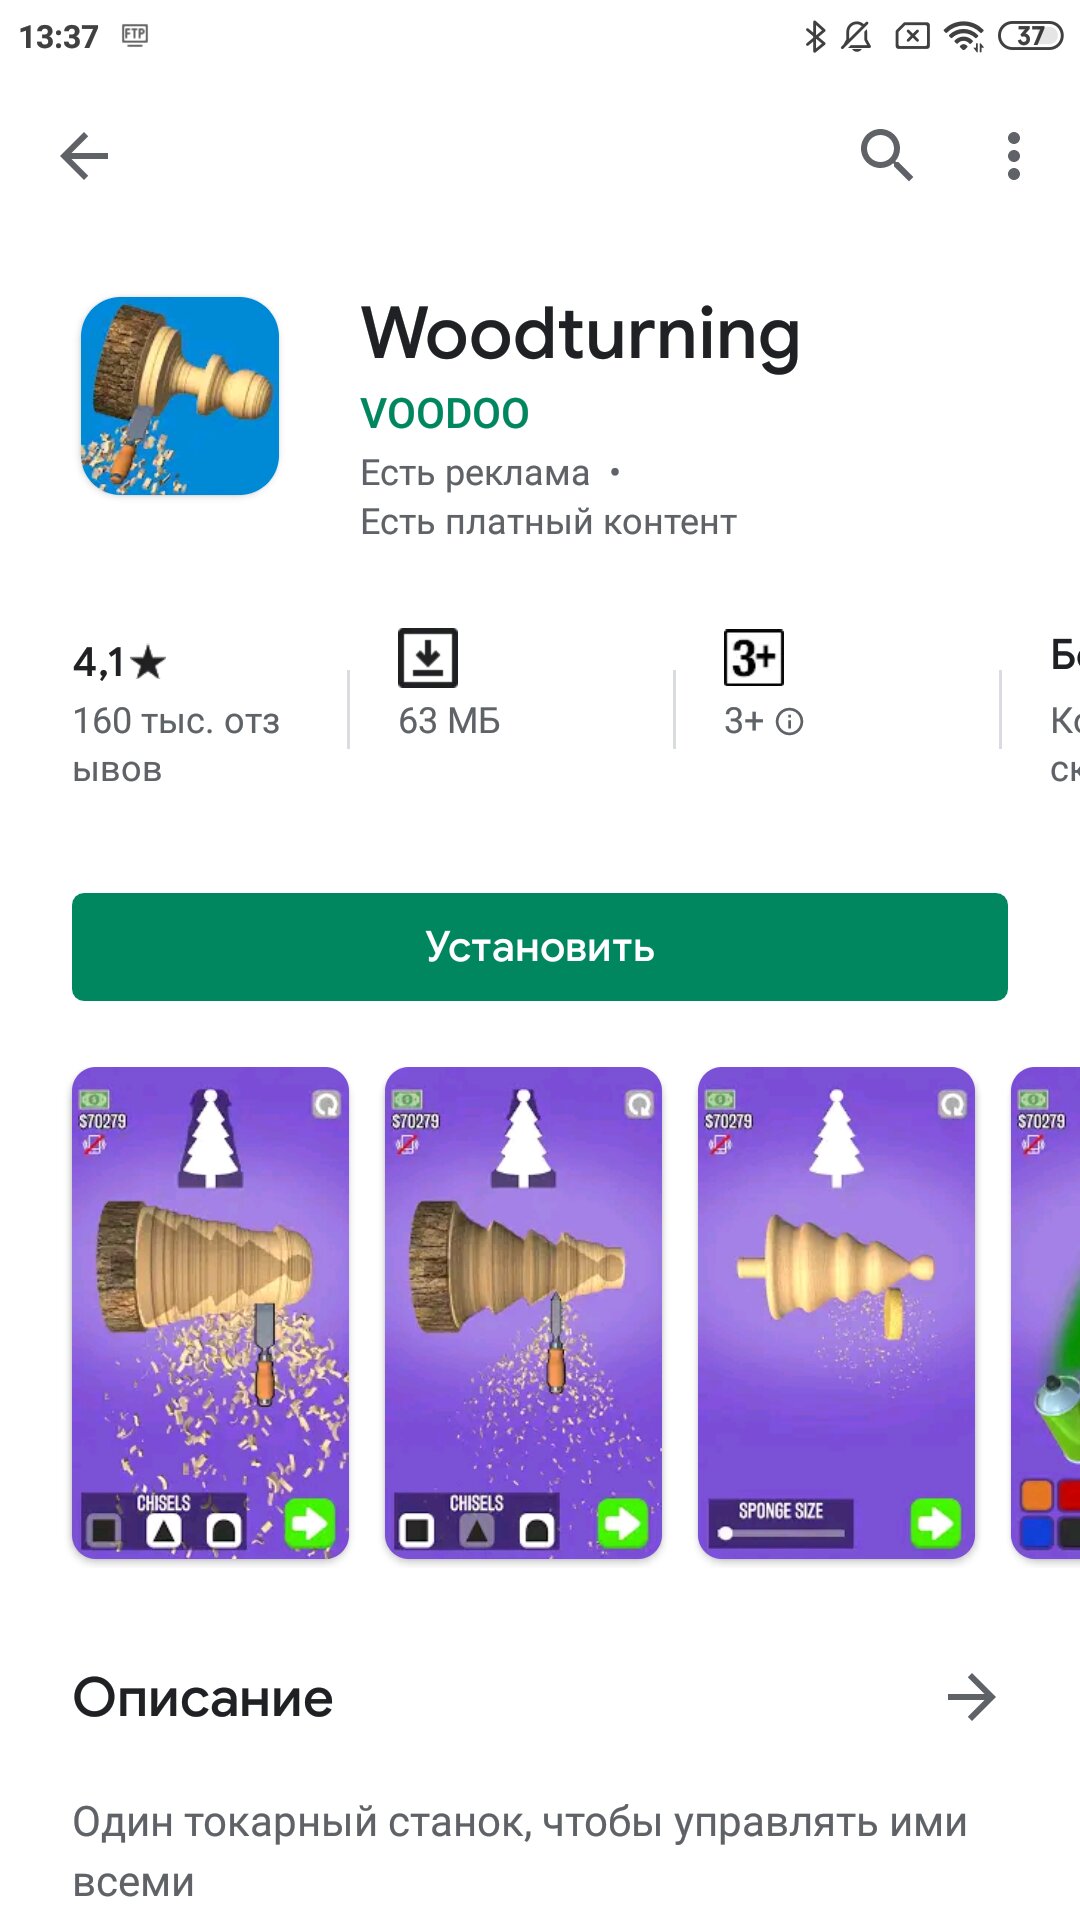 Play Store Downloaden Android Gratis